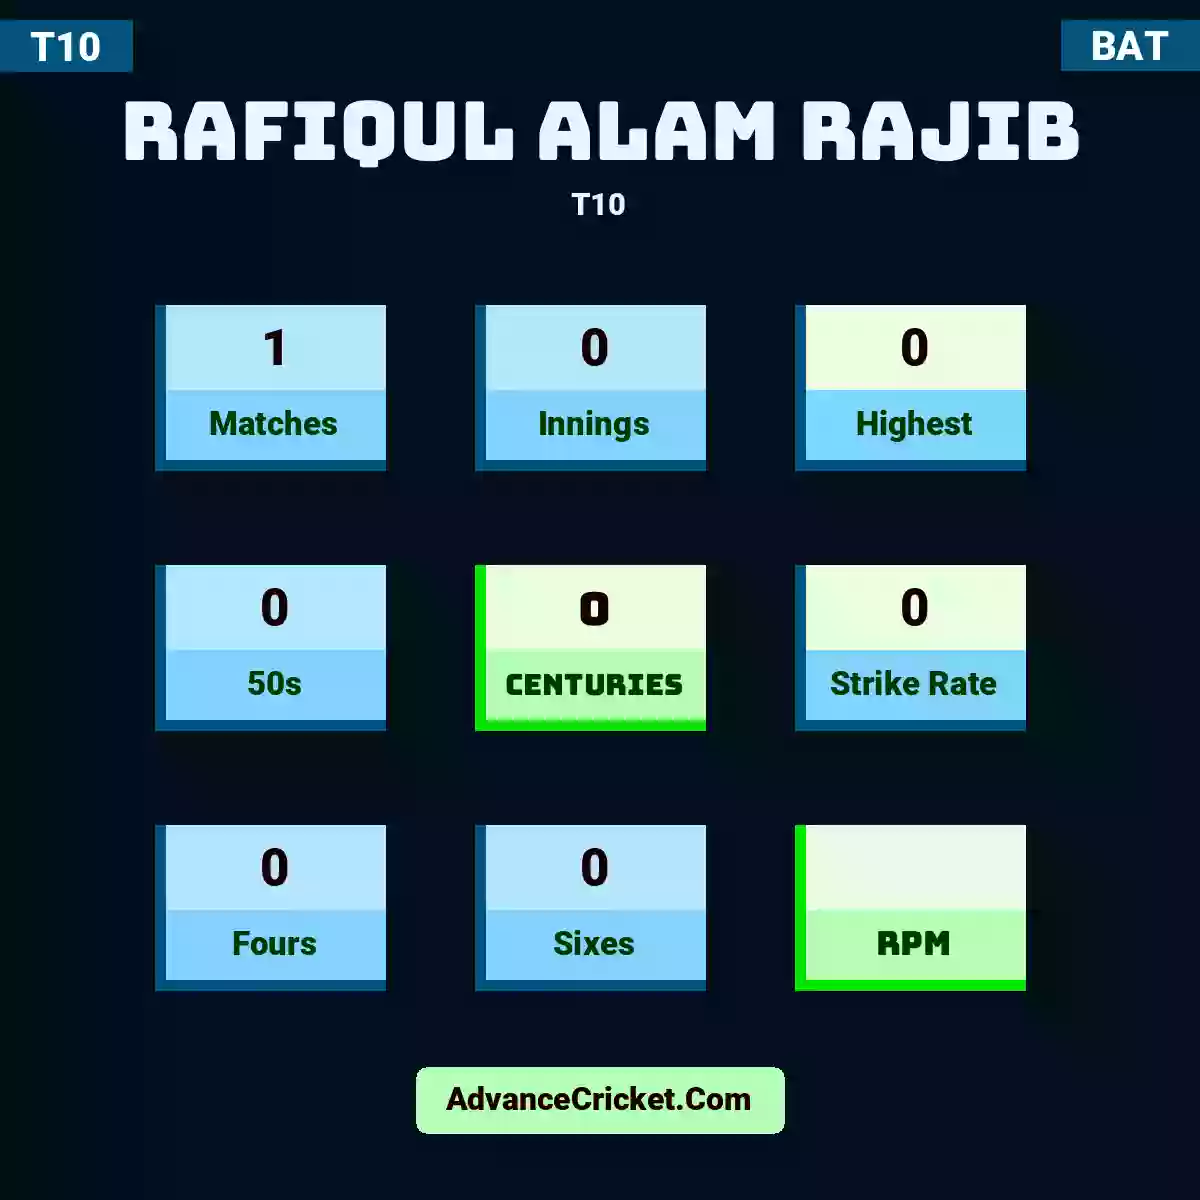 Rafiqul Alam Rajib T10 , Rafiqul Alam Rajib played 1 matches, scored 0 runs as highest, 0 half-centuries, and 0 centuries, with a strike rate of 0. R.Alam Rajib hit 0 fours and 0 sixes.